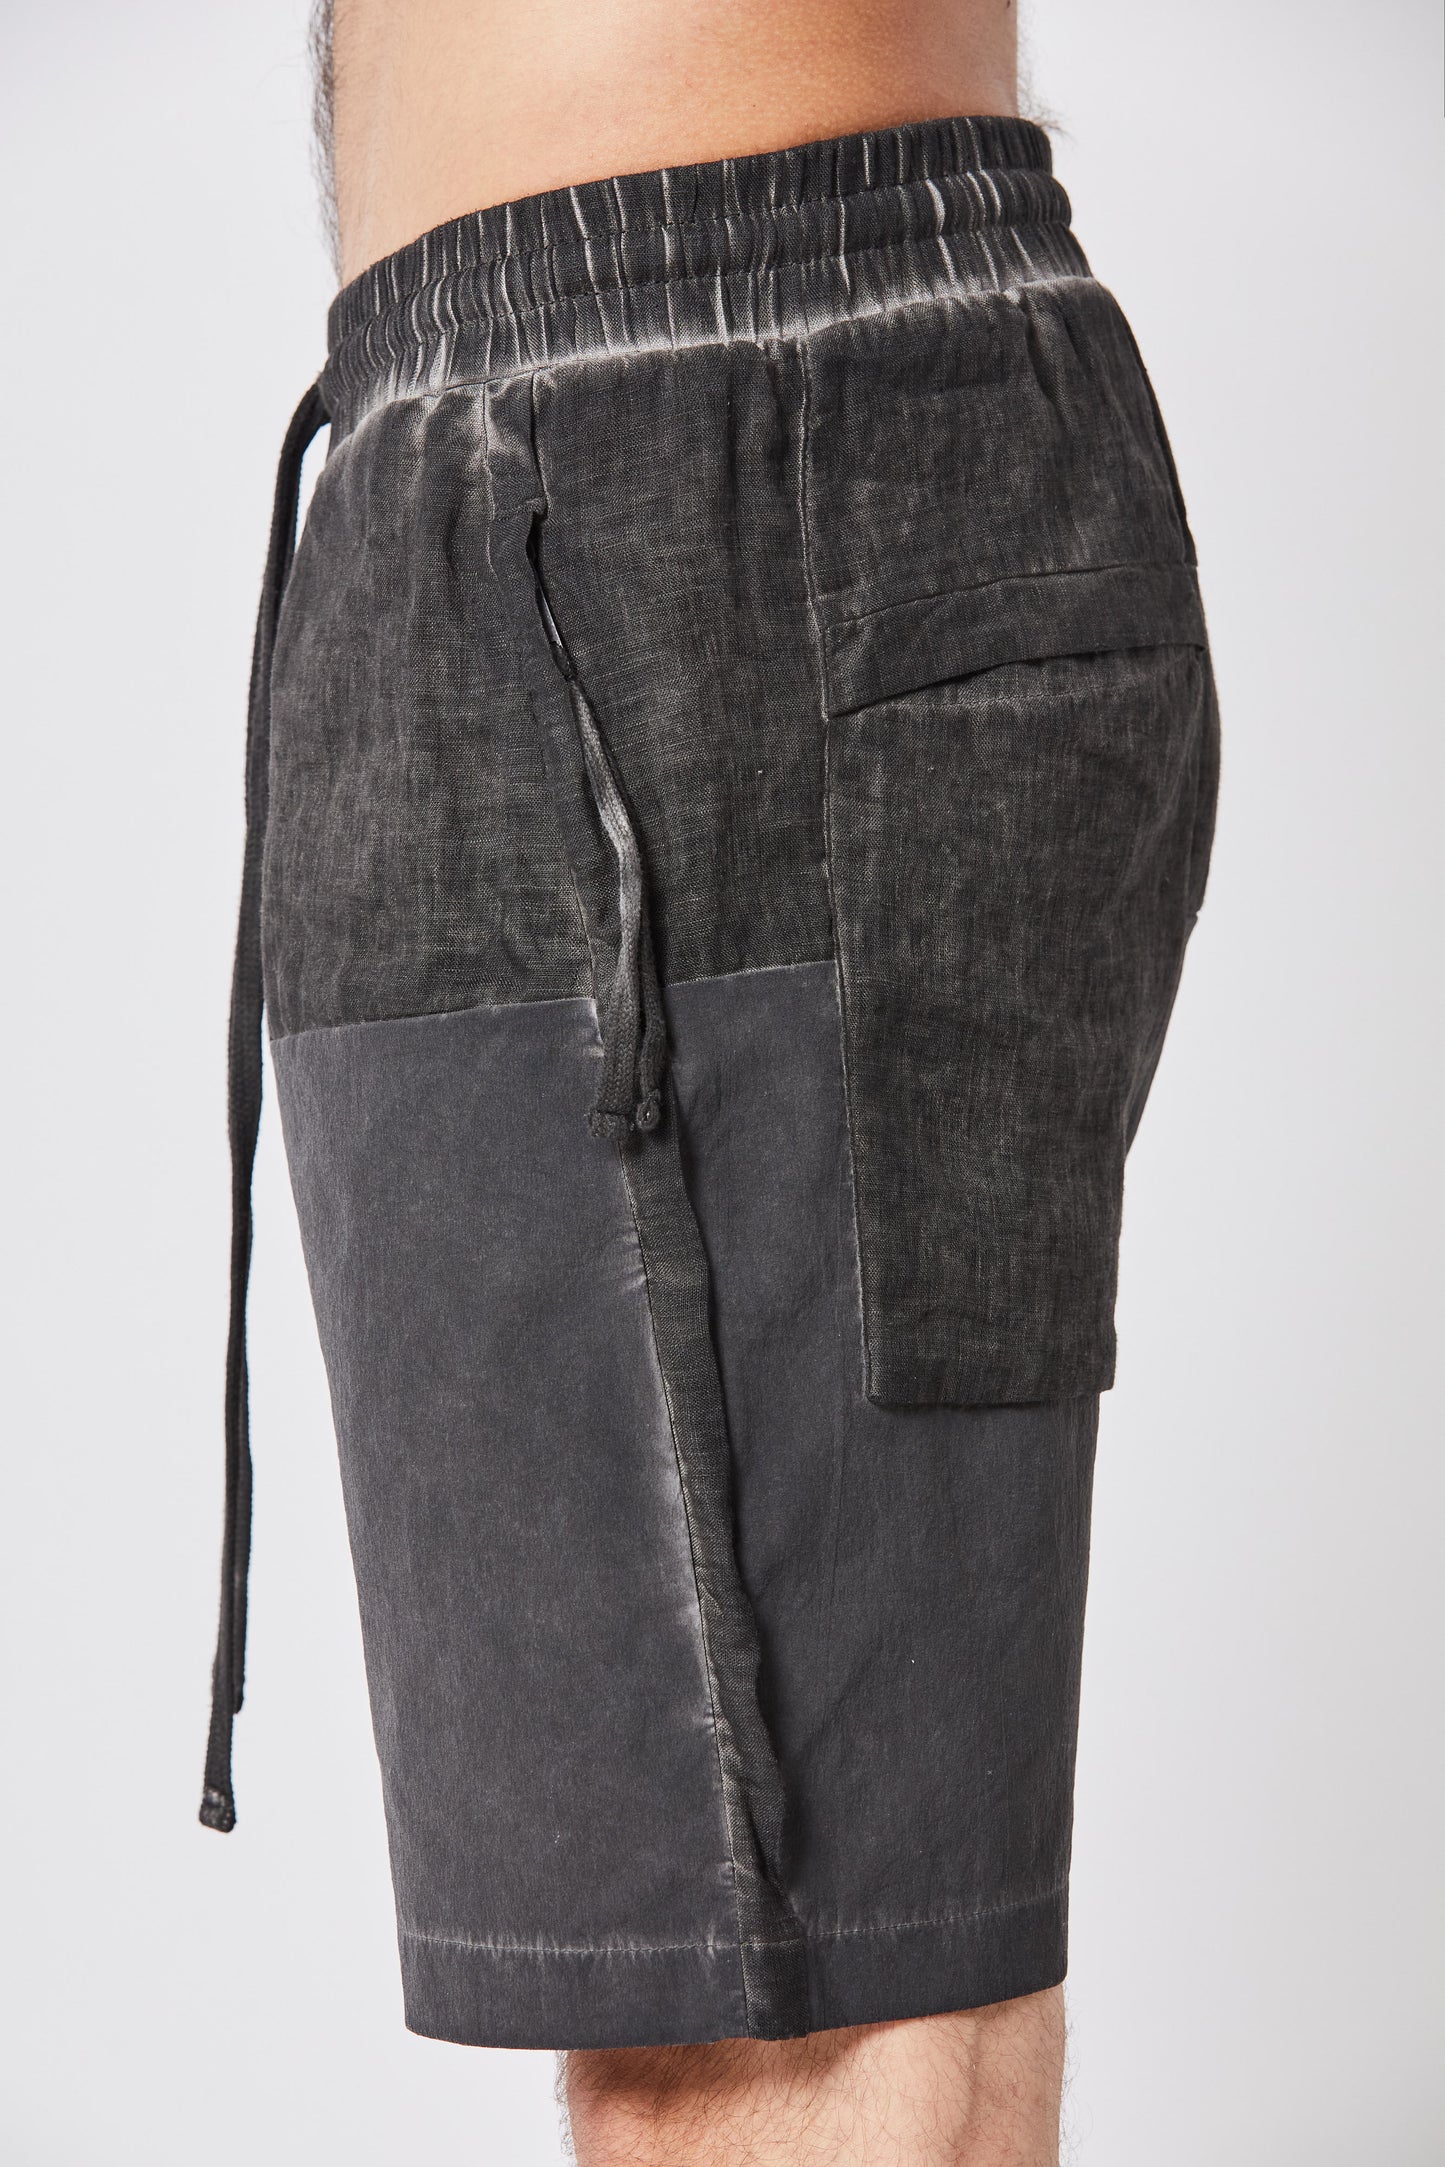 Black Oil Linen Panel Stretch Nylon Drop Crotch Shorts MST 351